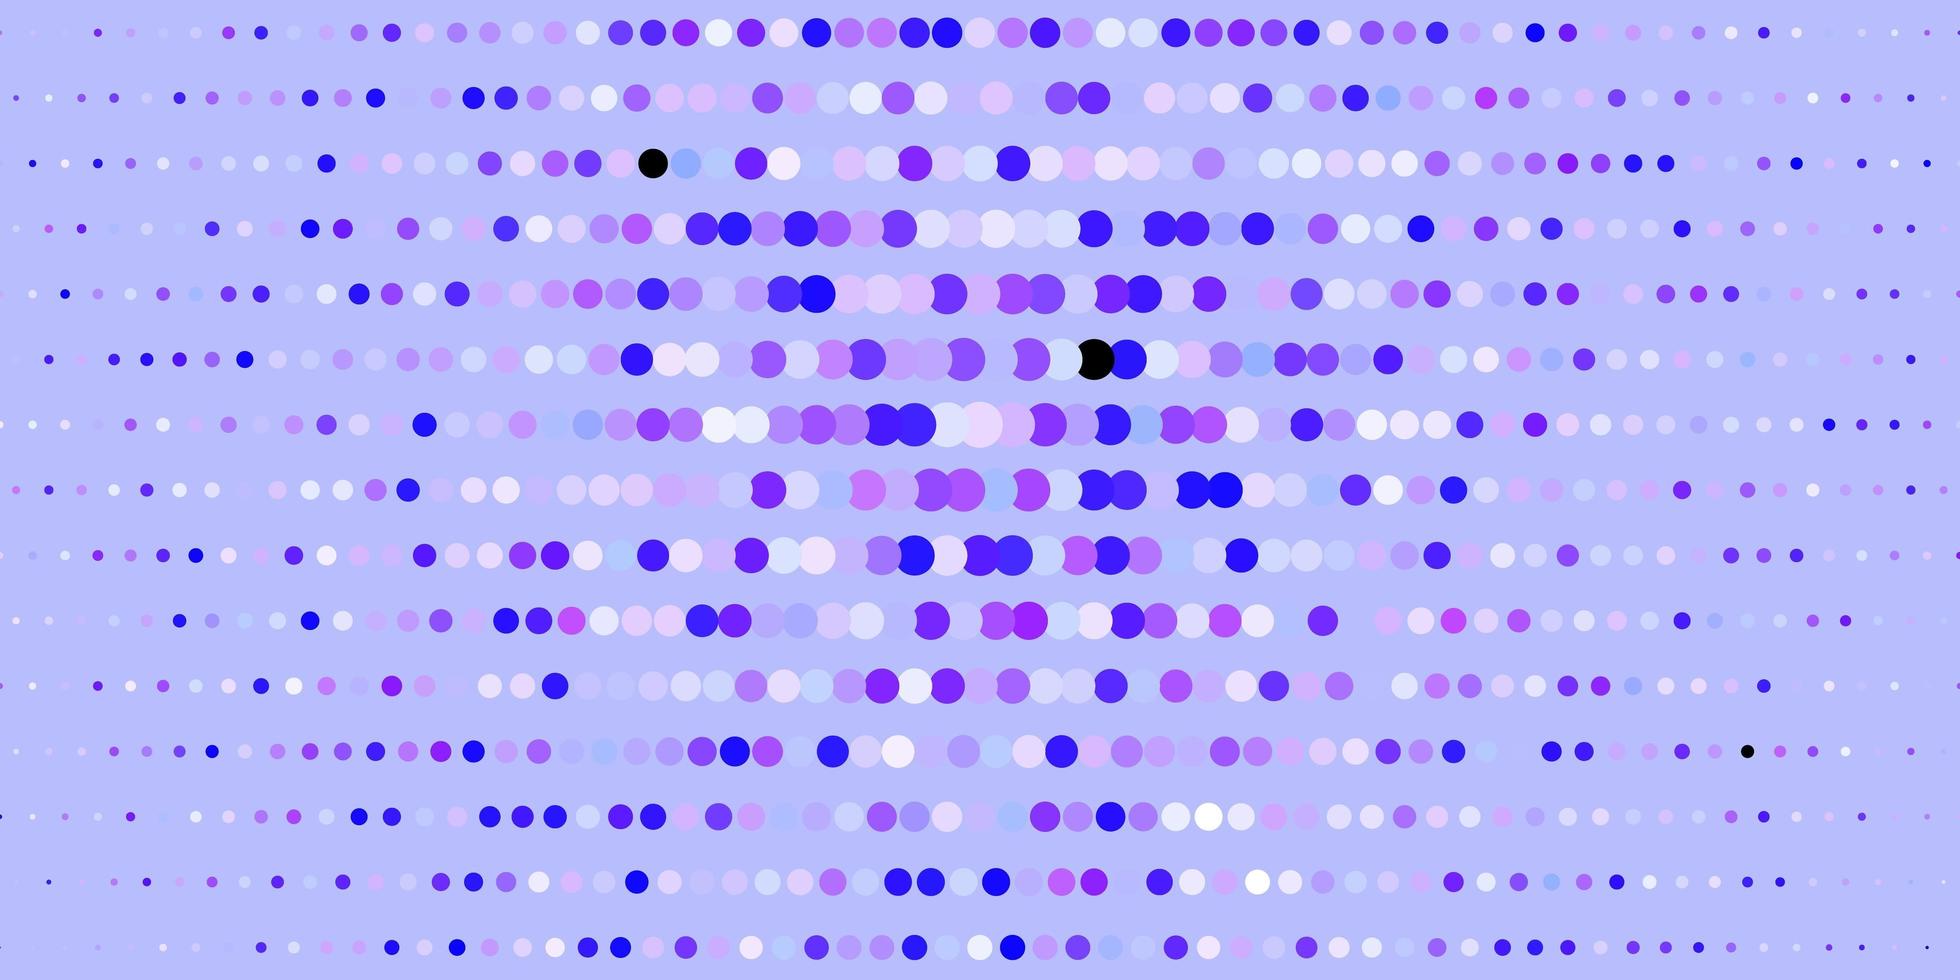 Telón de fondo de vector púrpura oscuro con puntos ilustración abstracta con manchas de colores en el diseño de estilo de la naturaleza para carteles, pancartas